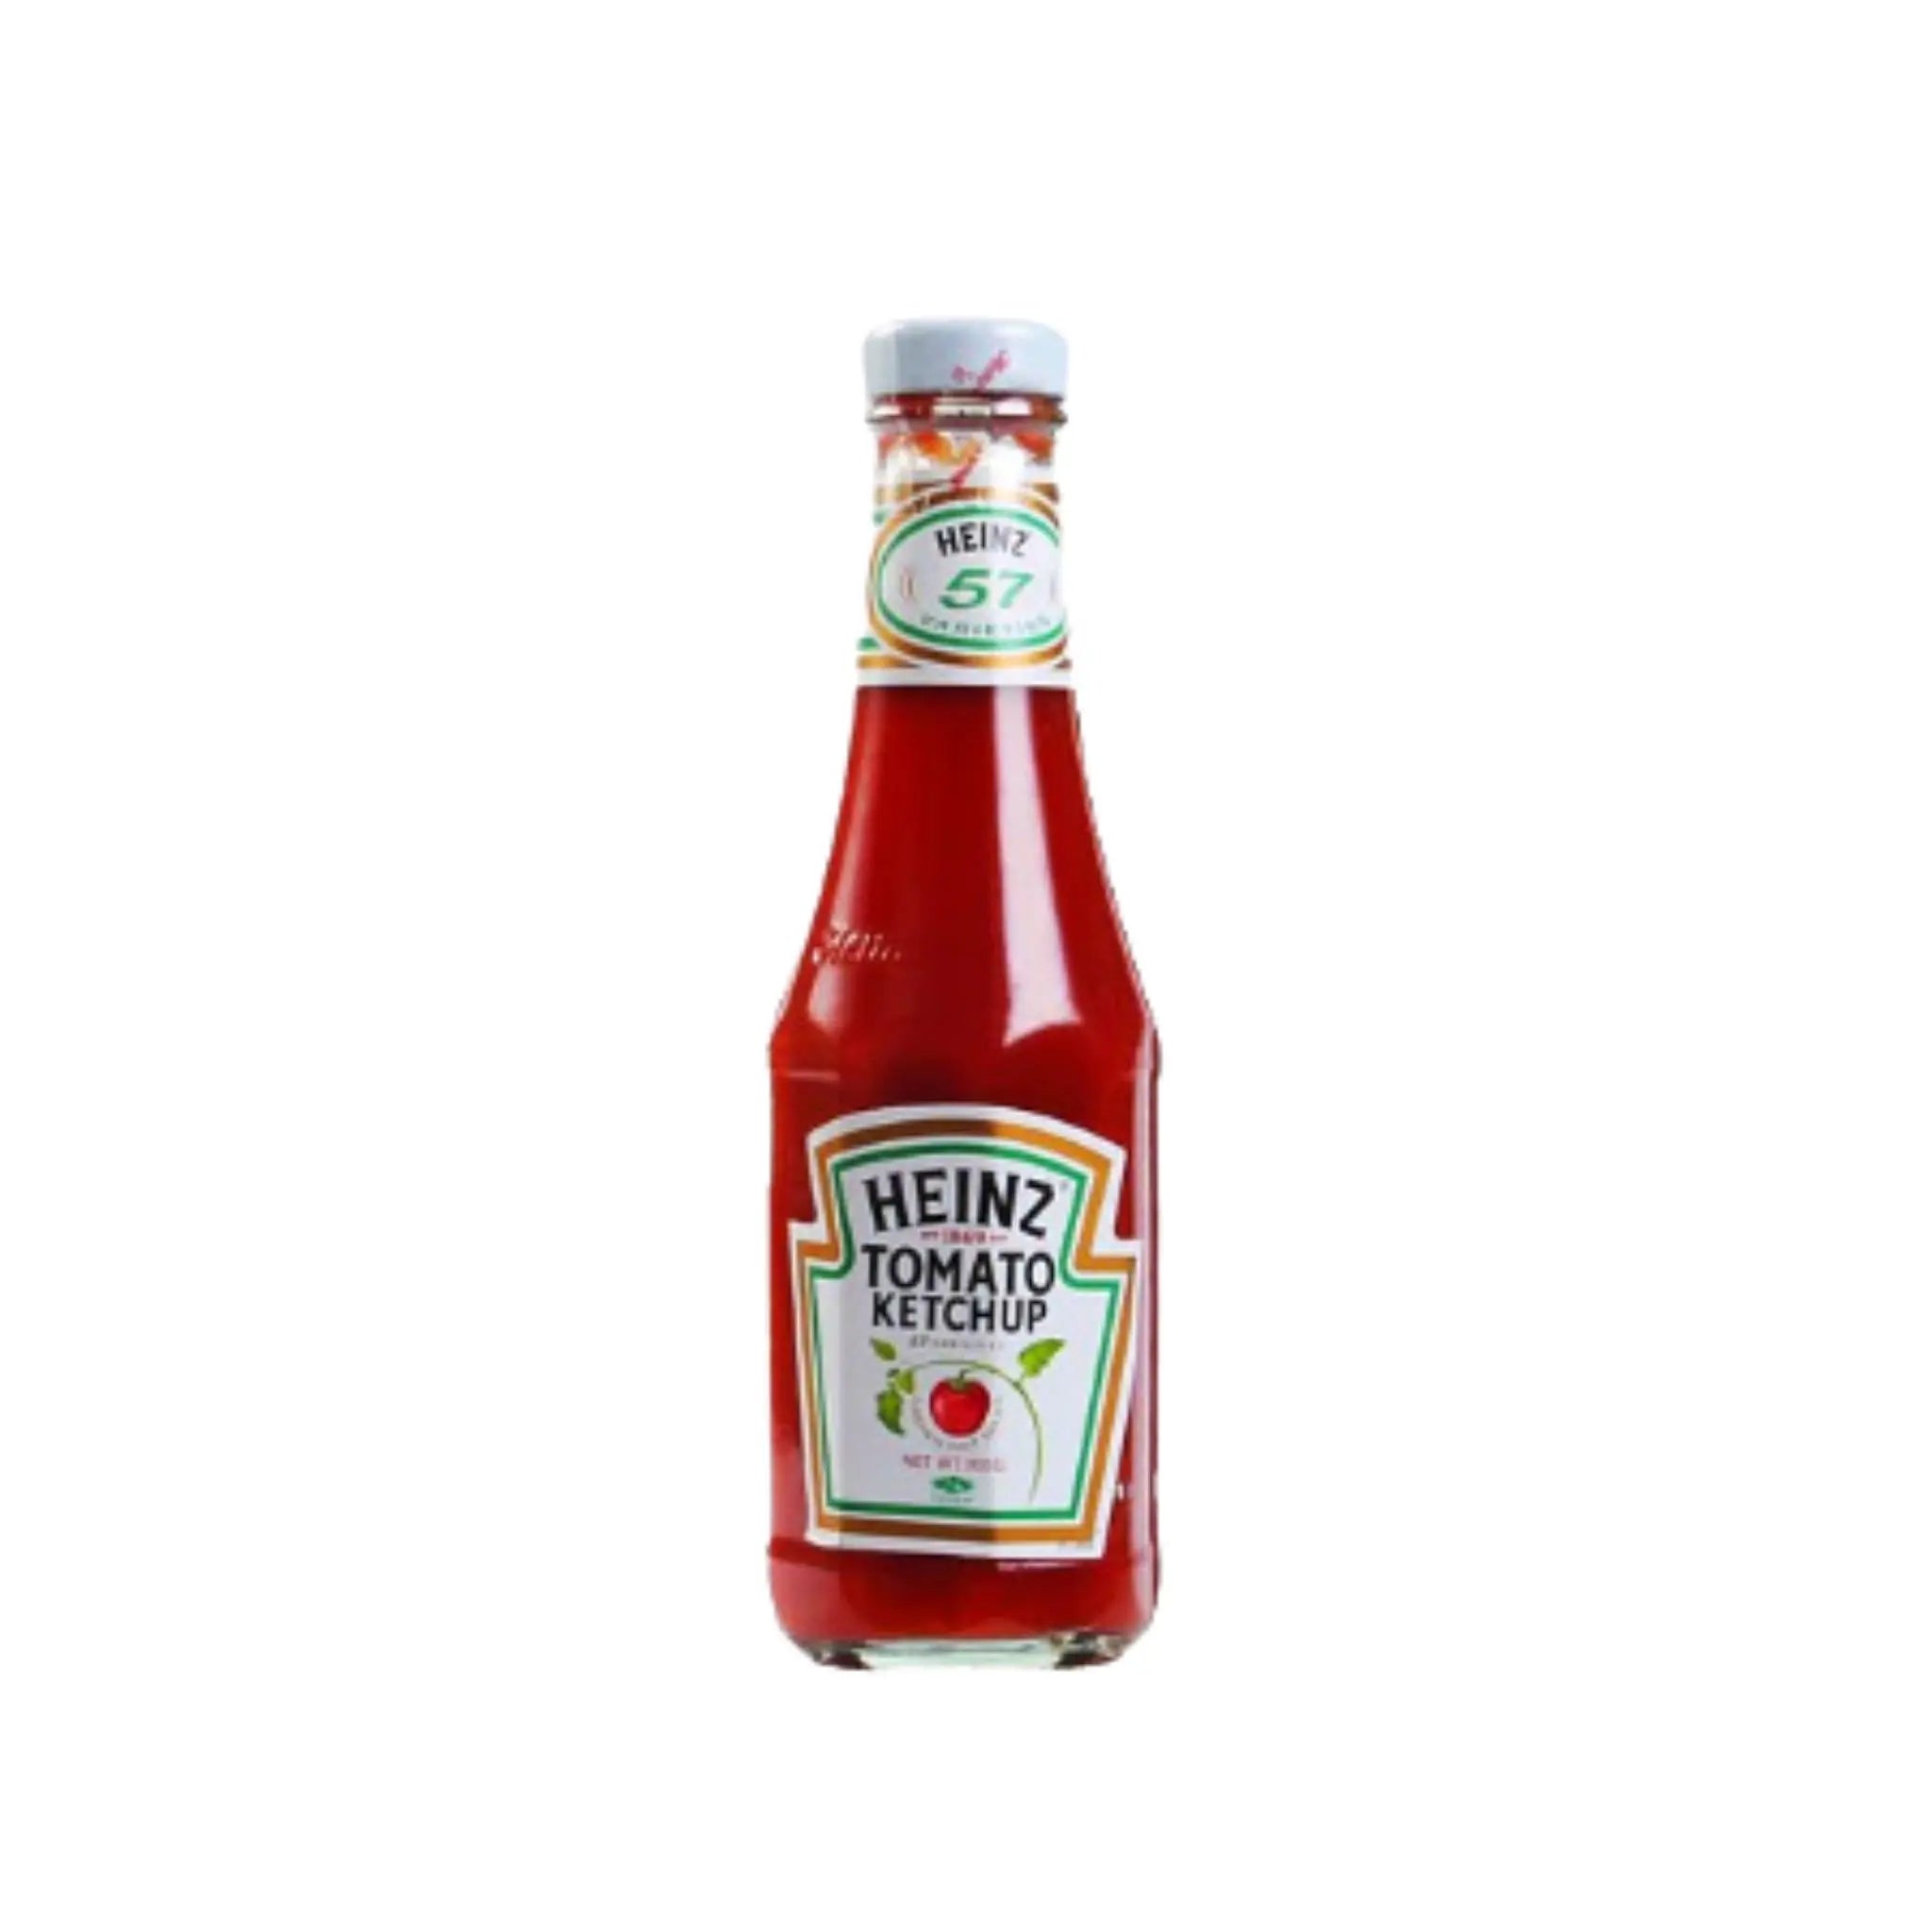 Heinz Tomato Ketchup Glass Bottle - 12x300g (1 carton) - Marino.AE